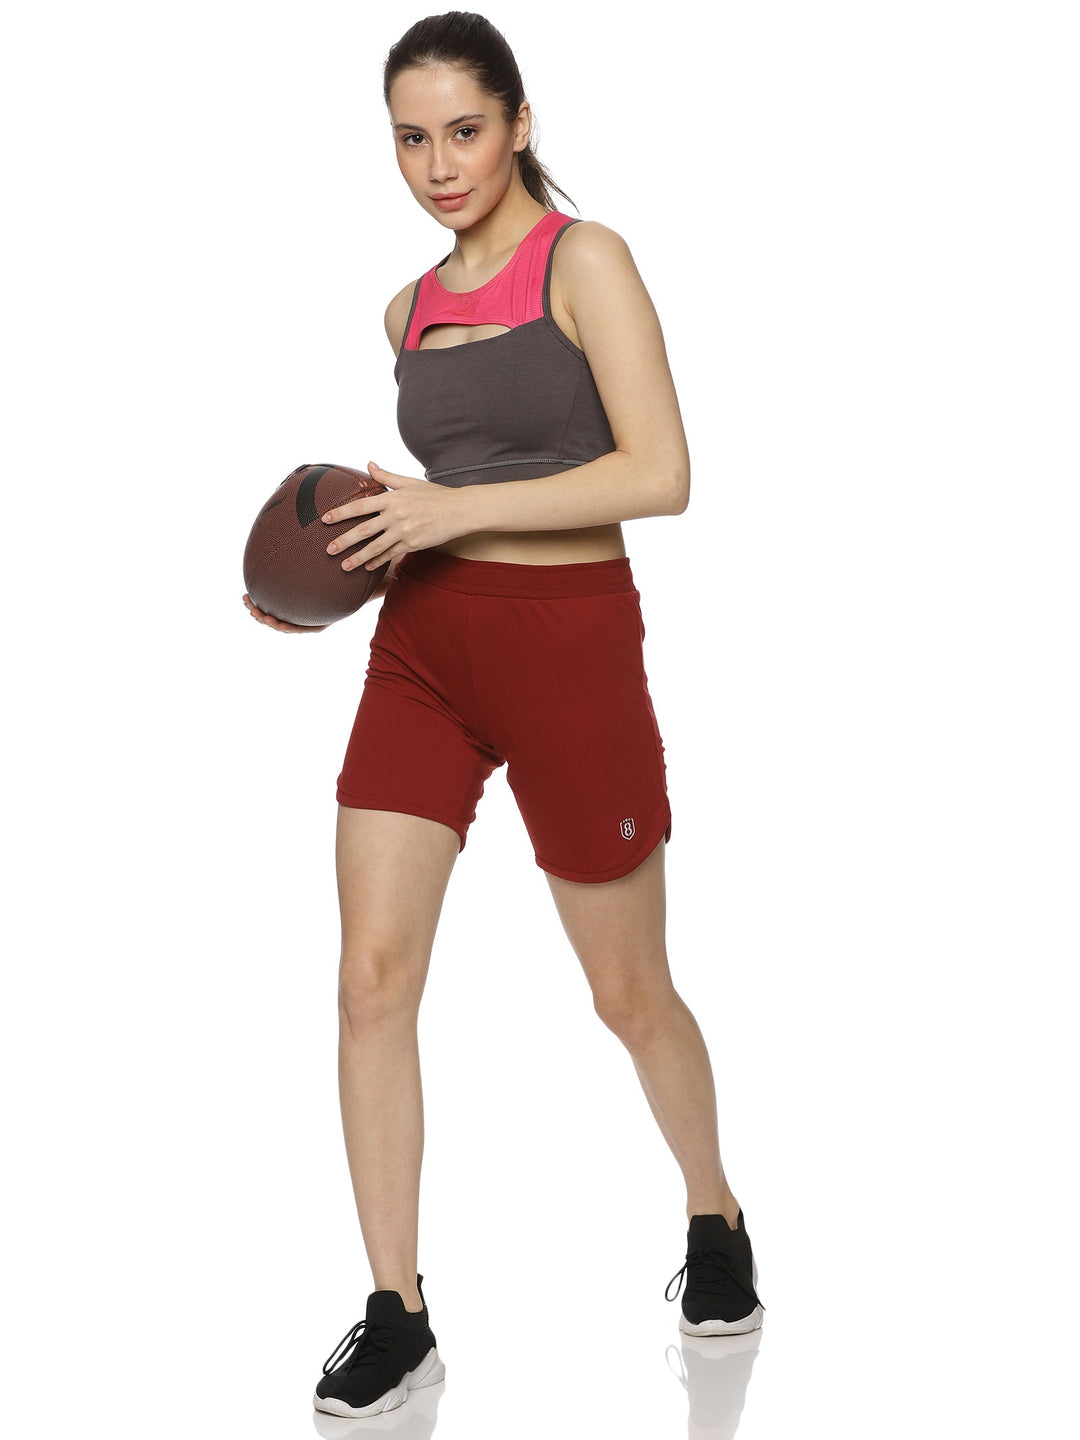 Women's Solid training shorts with Rib Elasticated Drawstring waist.